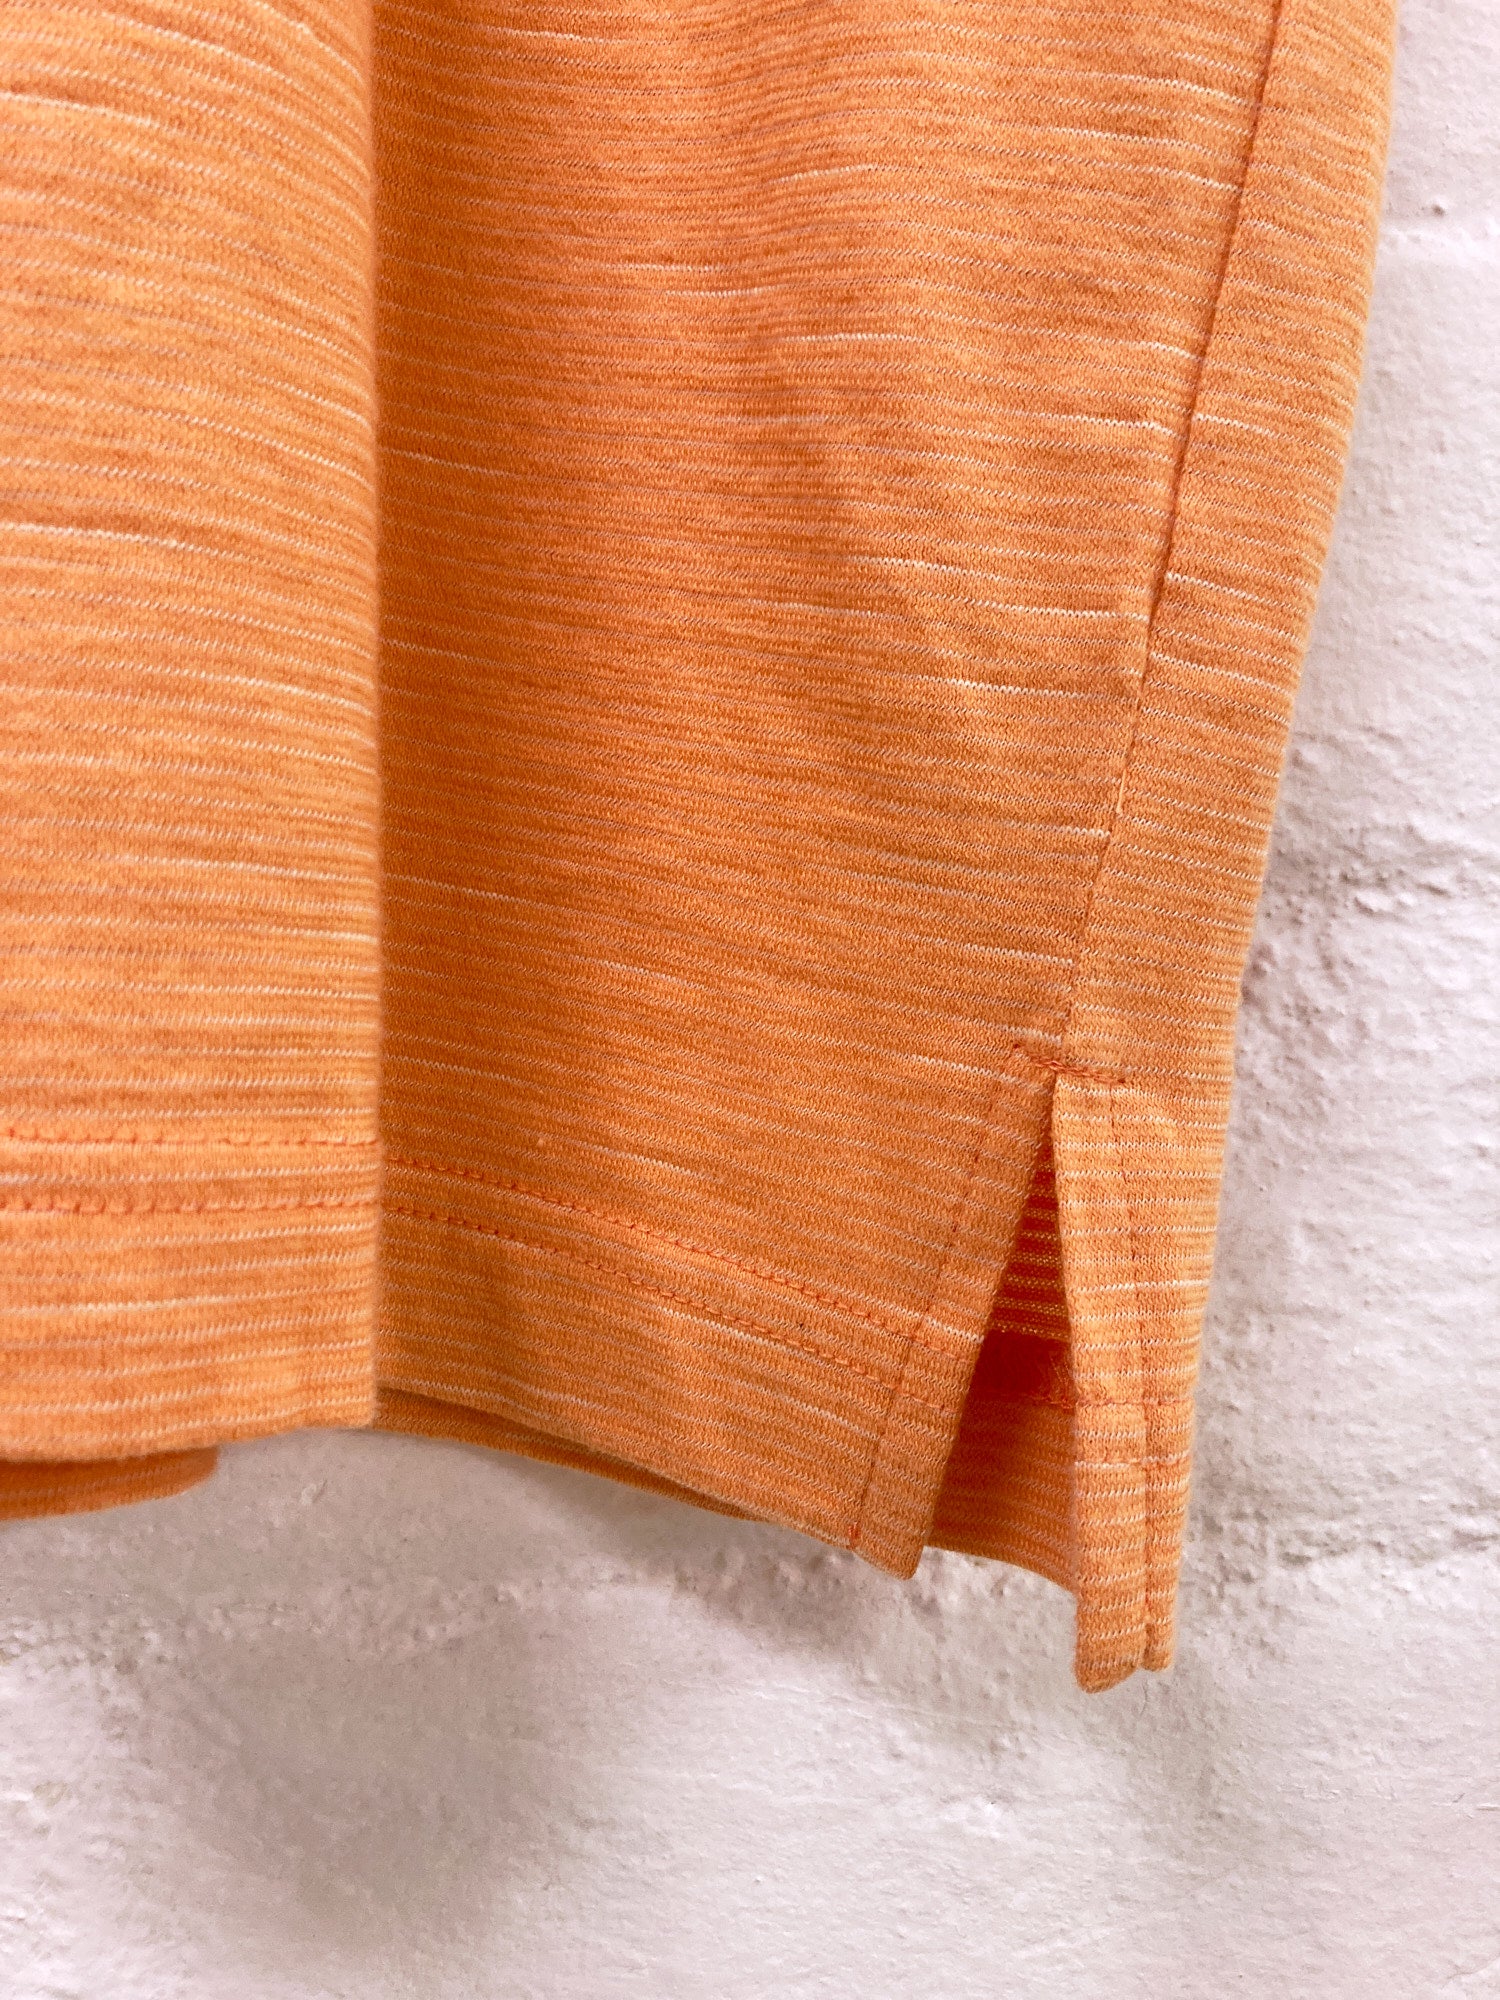 Allegri orange cotton jersey zip neck polo shirt - size 48